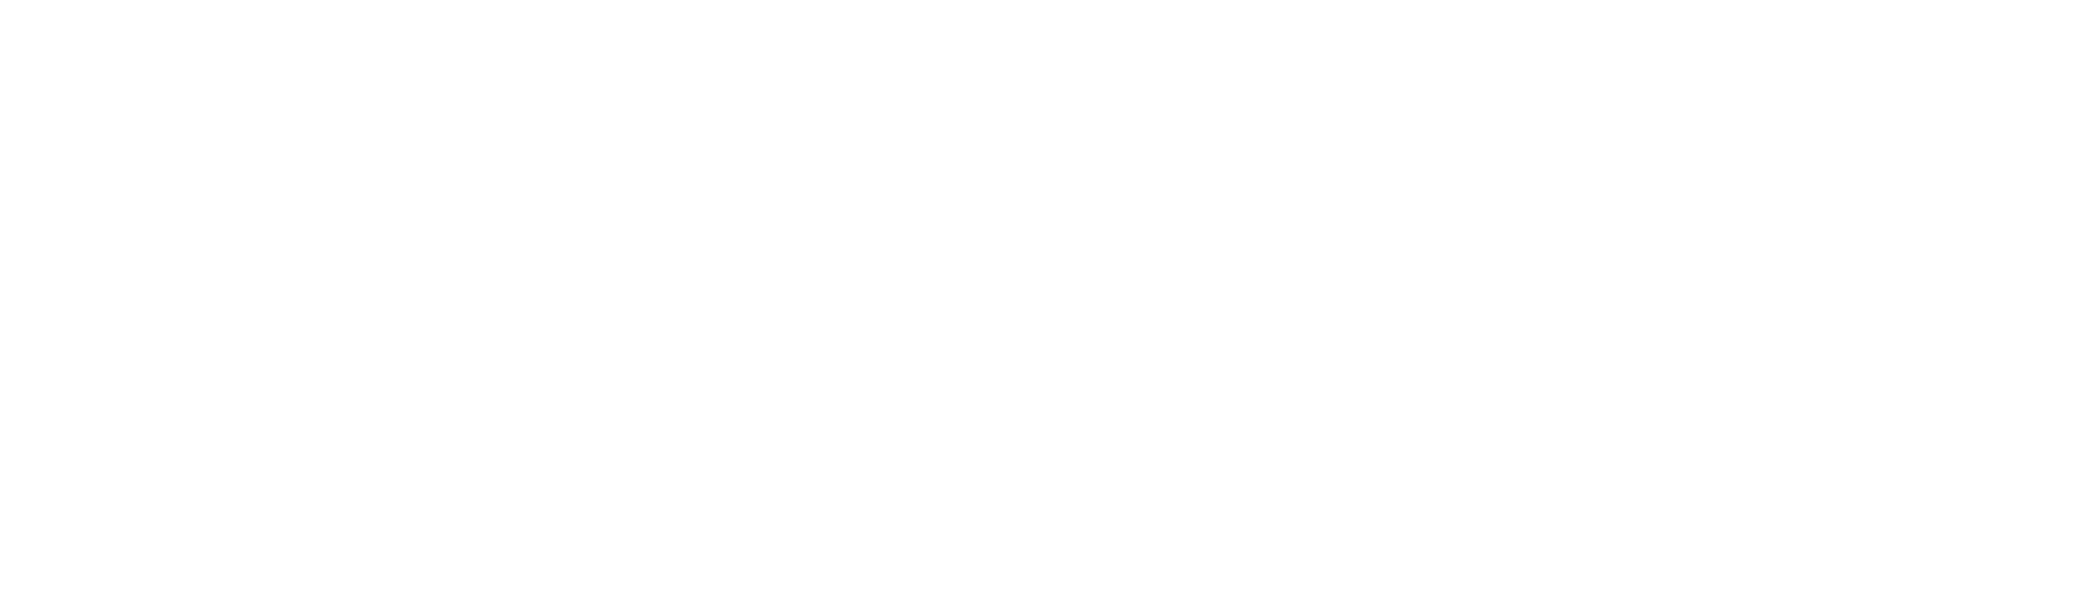 geigle_logo_nachbau_weis.png